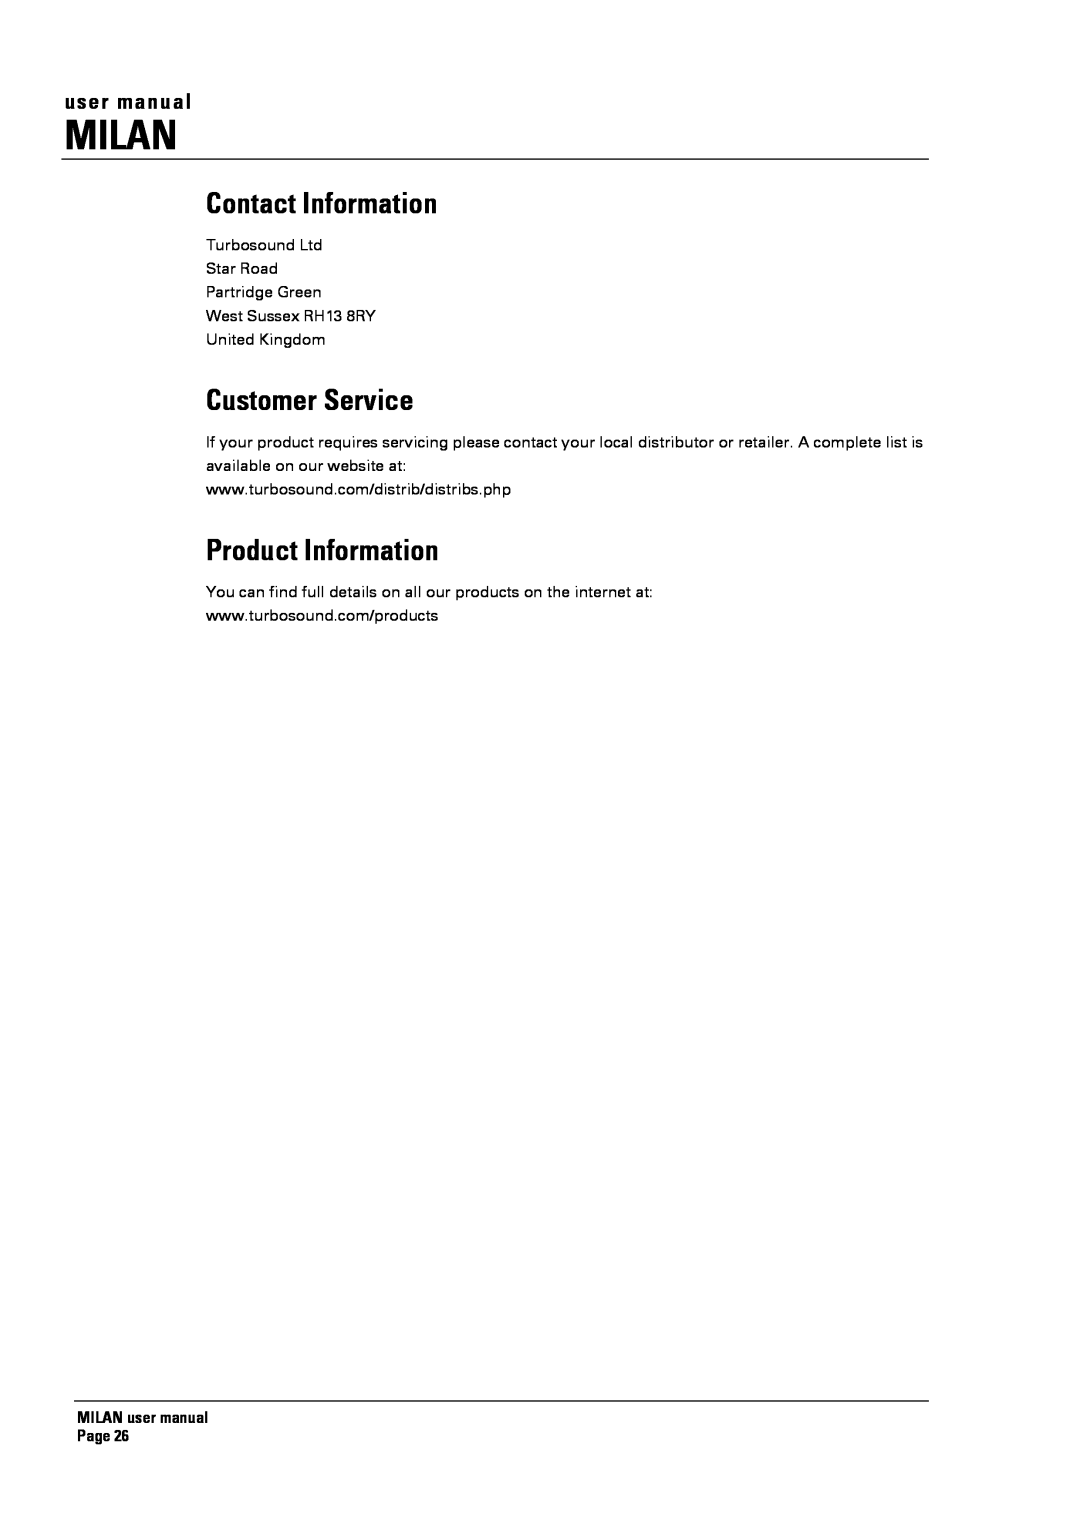 Turbosound MI5 Contact Information, Customer Service, Product Information, Milan, MILAN user manual Page 